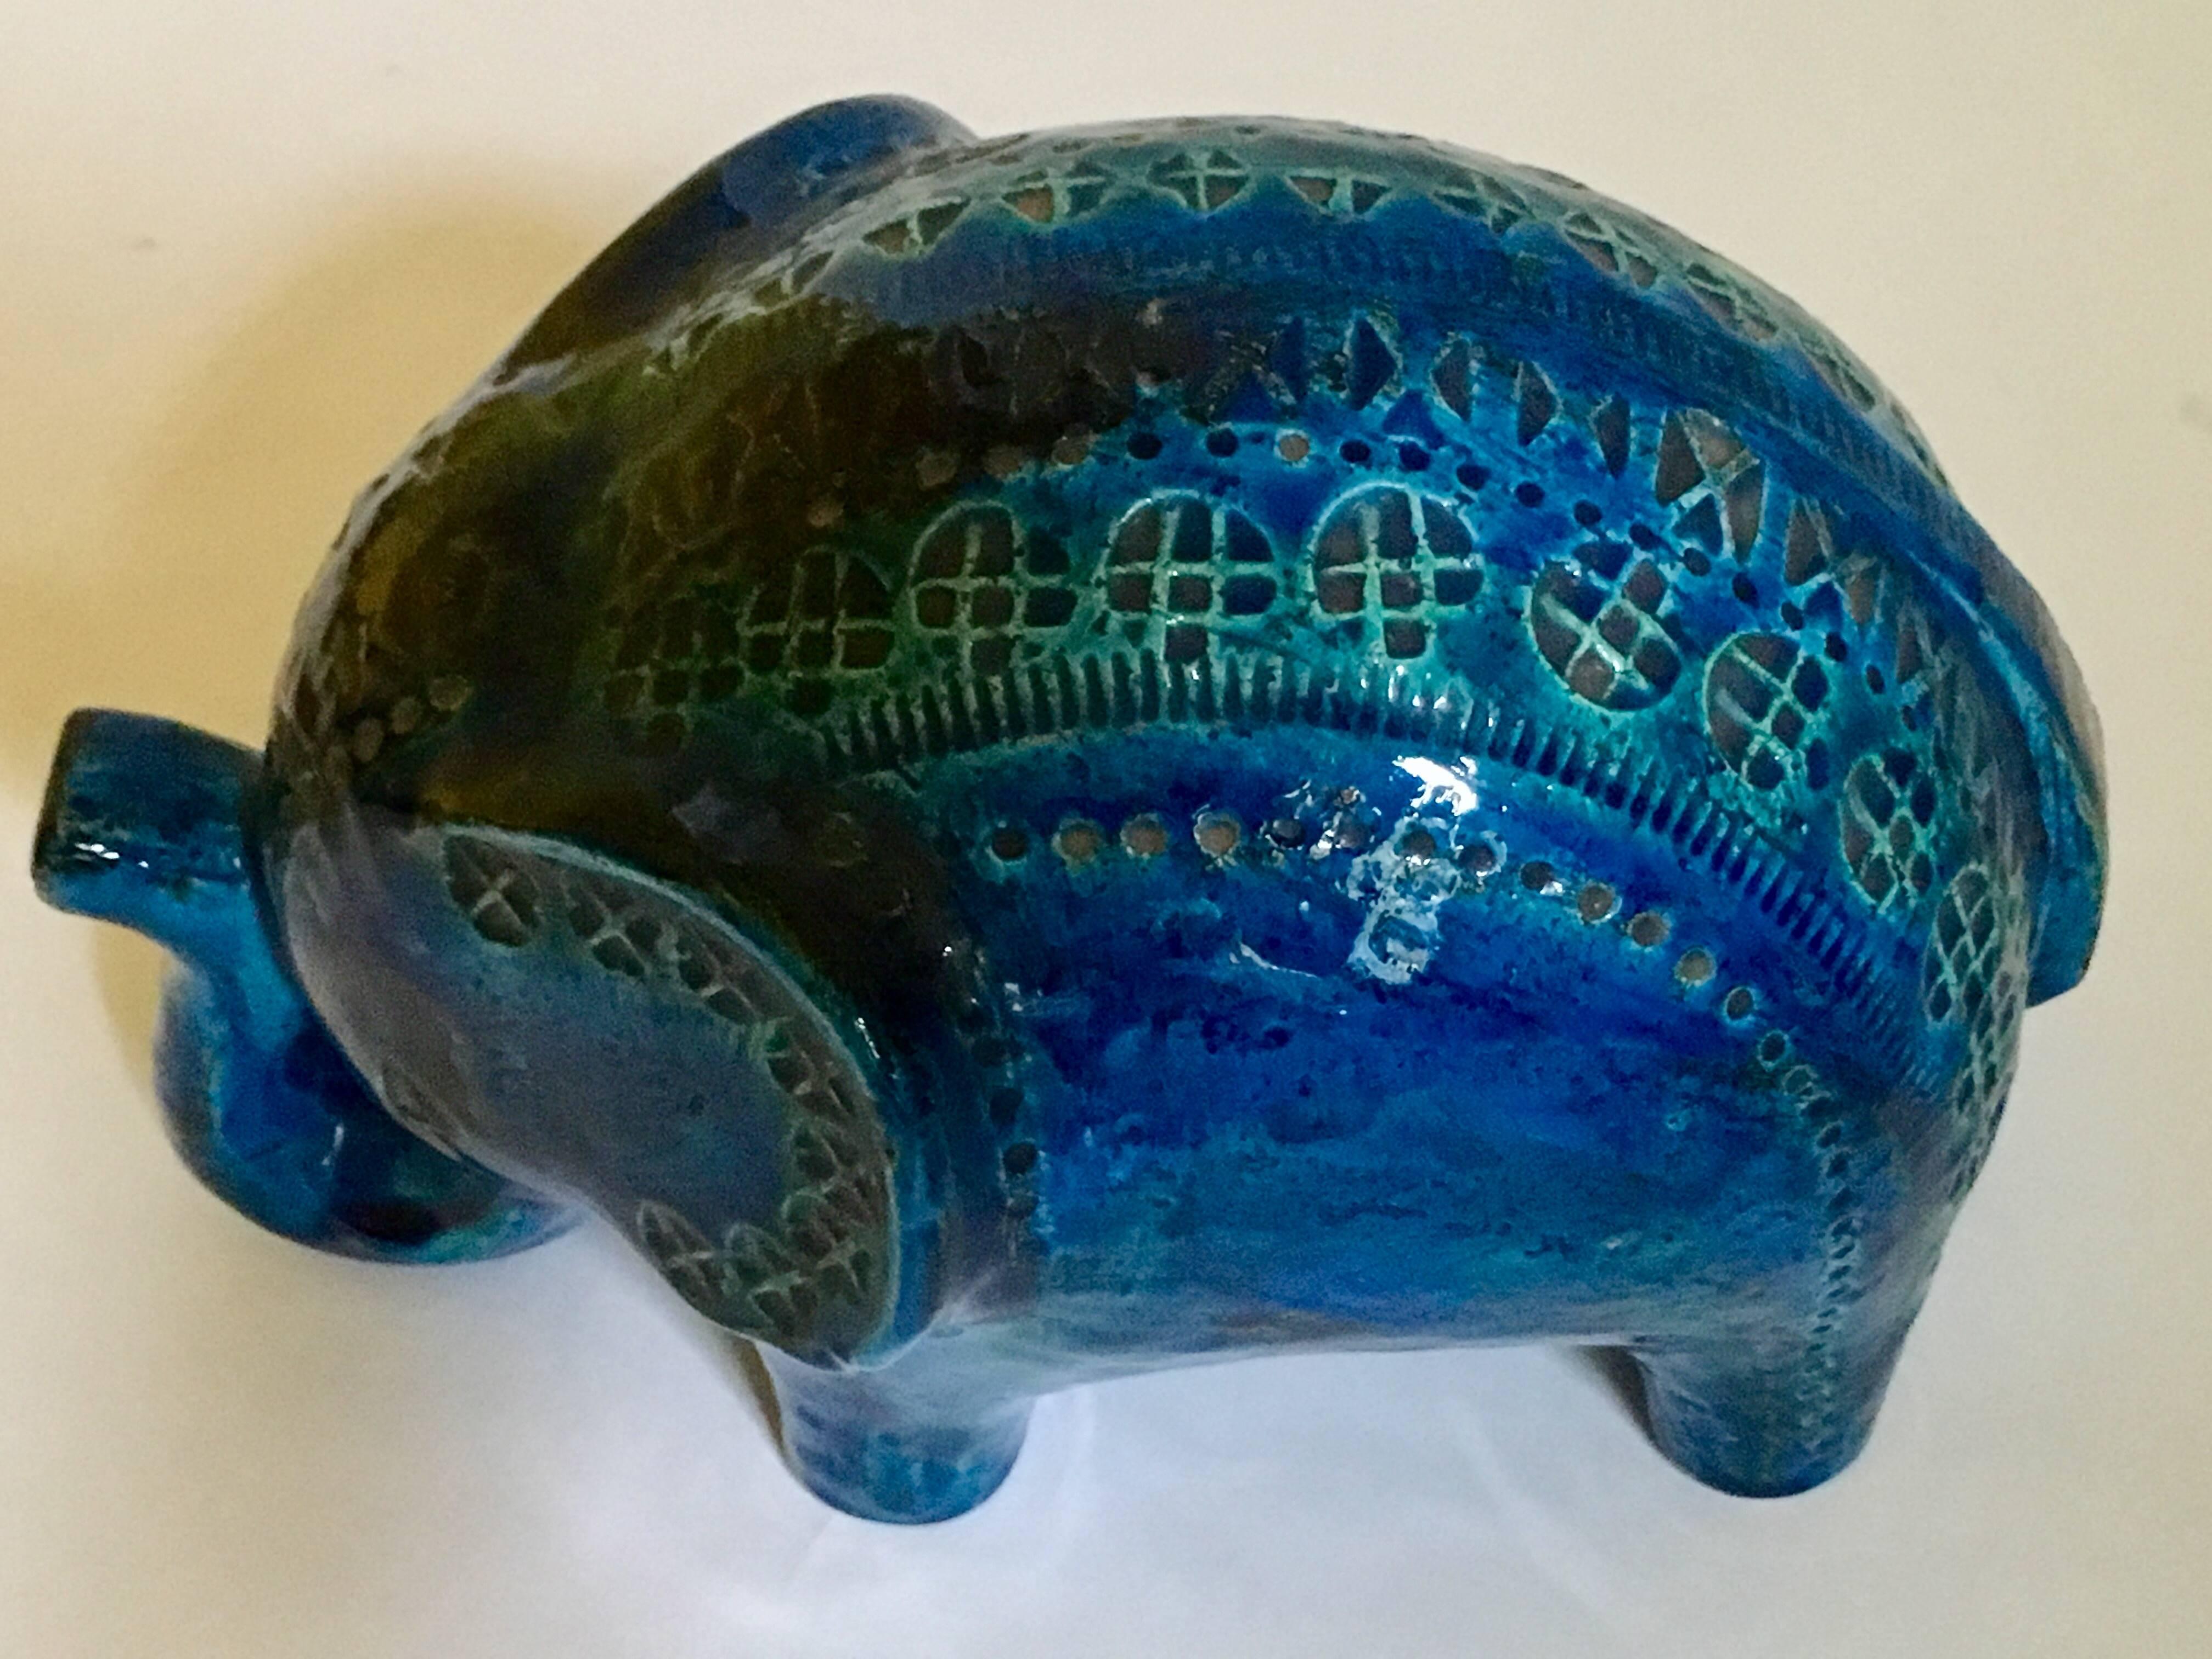 Hand-carved pottery elephant designed by Aldo Londi. Rimini Blu (turquoise) high glaze with incised geometric ornament. Signed under heavy glaze.